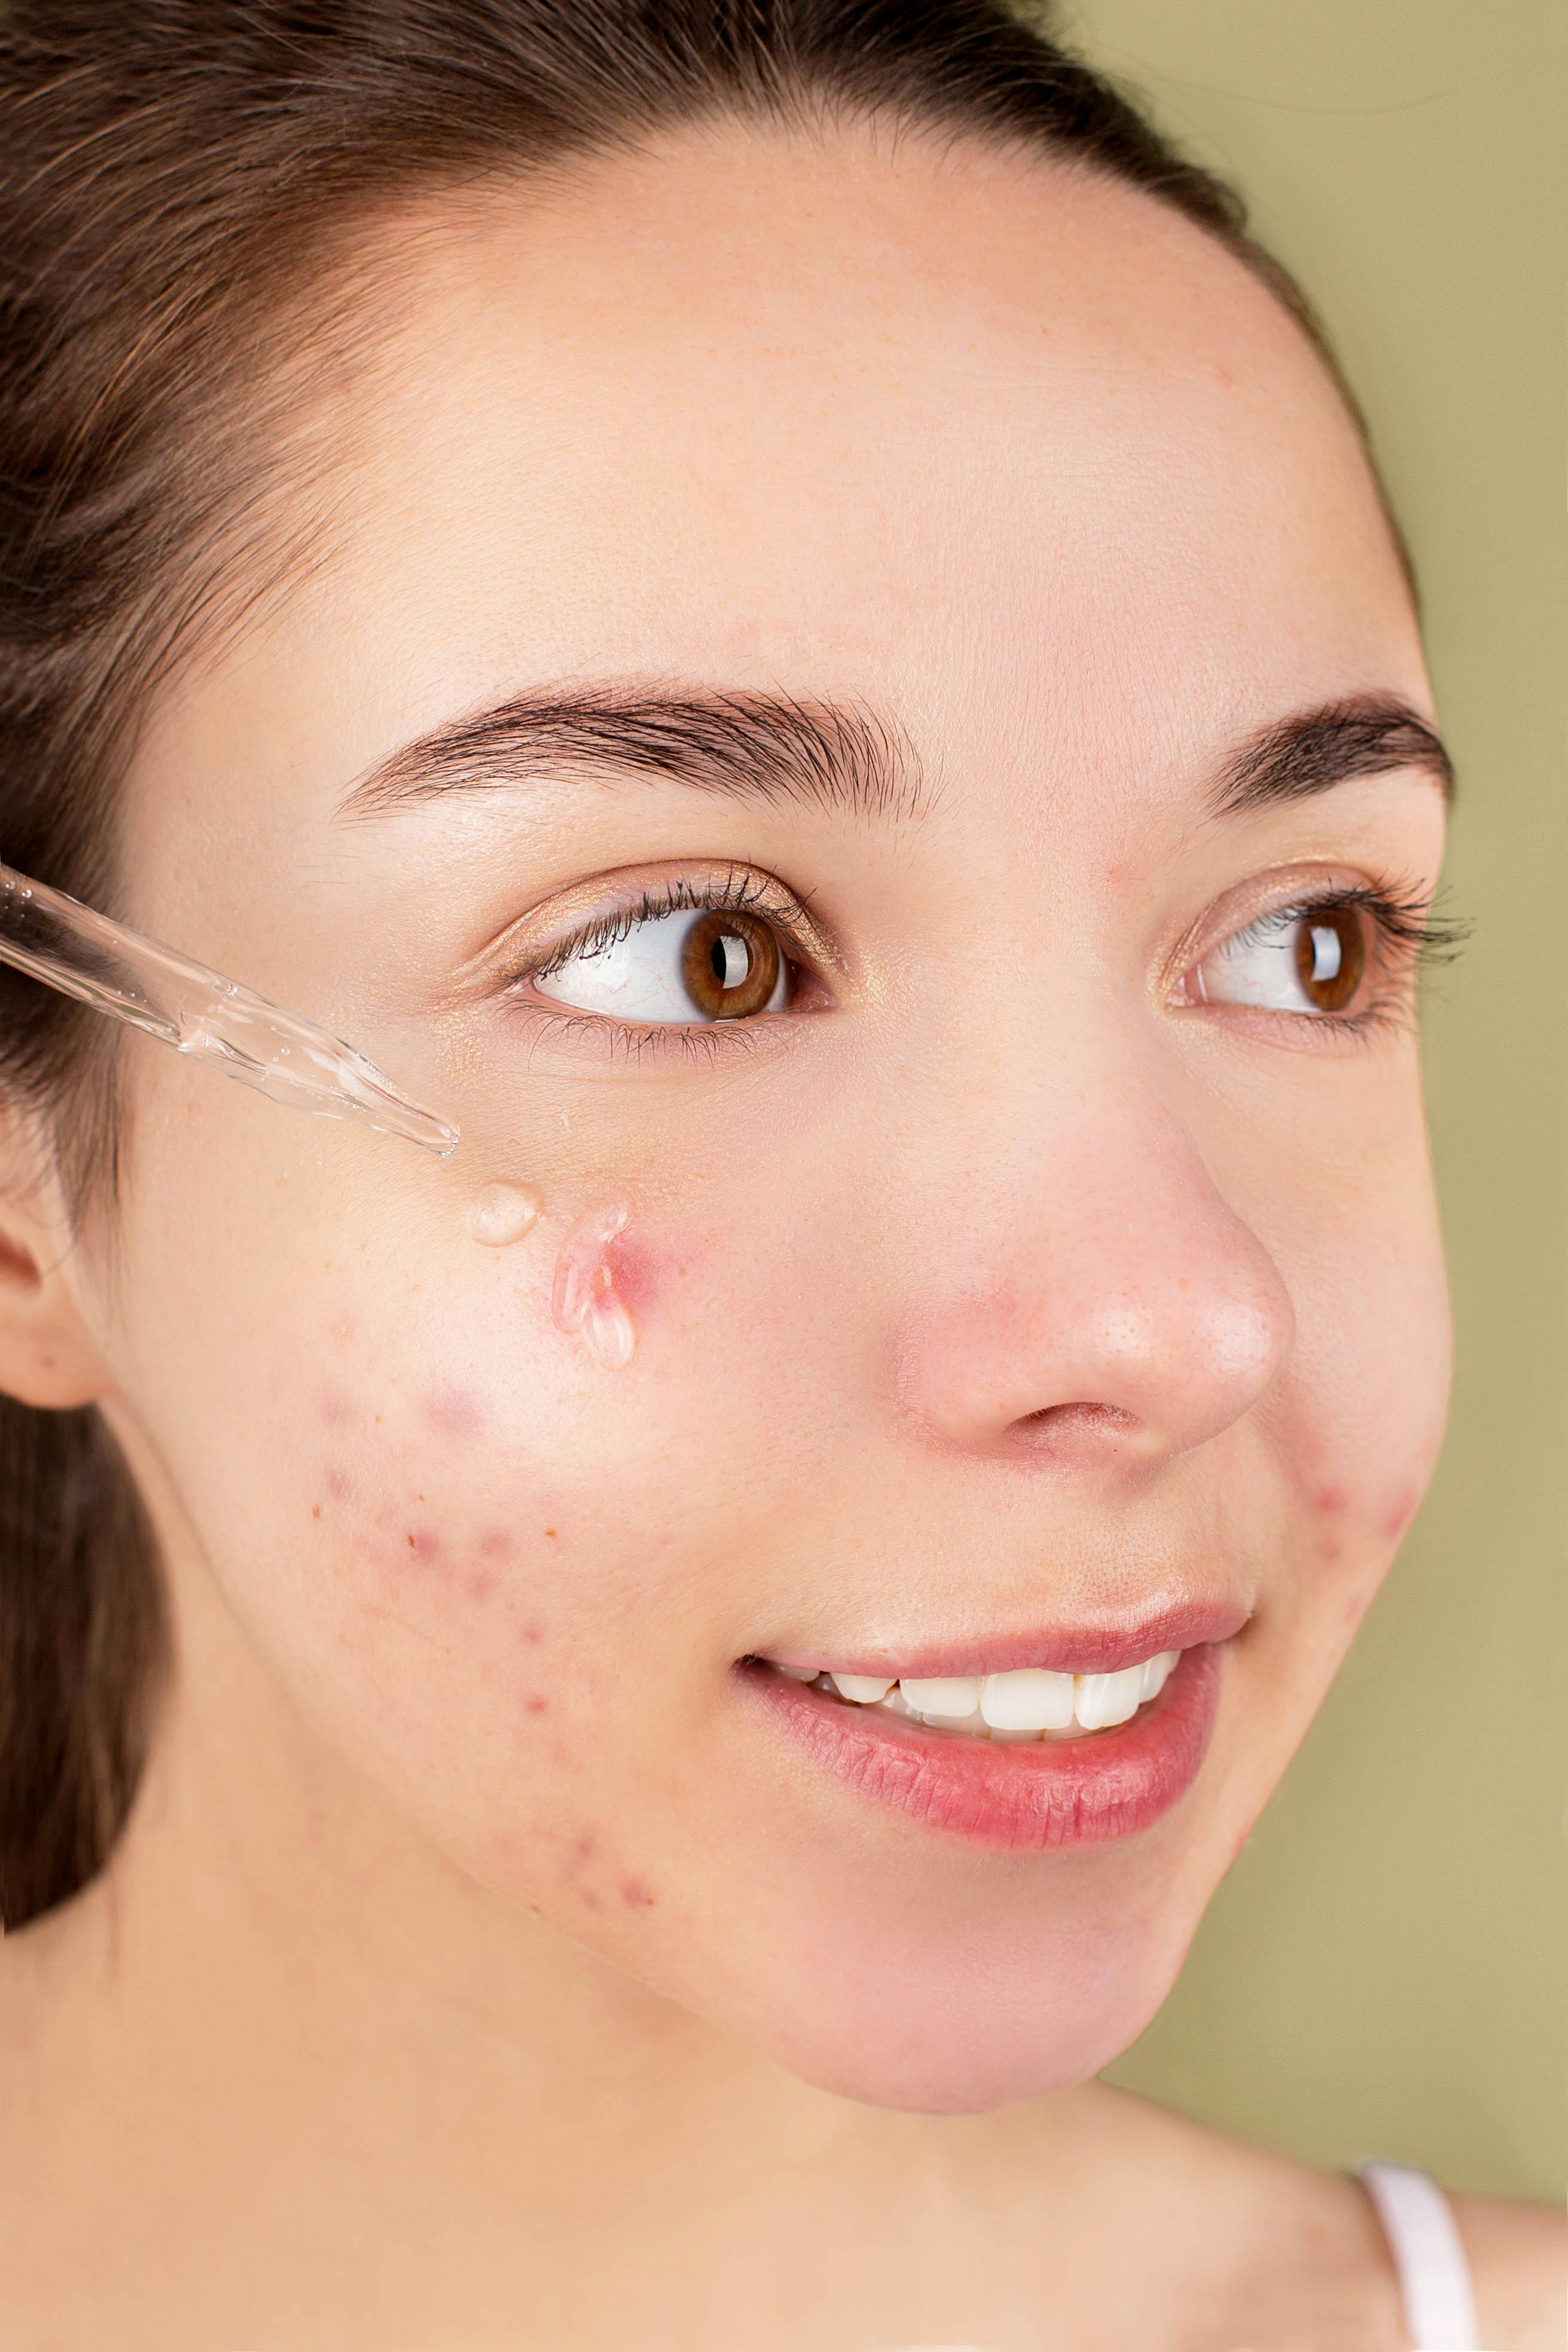 100+ Best Pimple Photos · 100% Free Download · Pexels Stock Photos